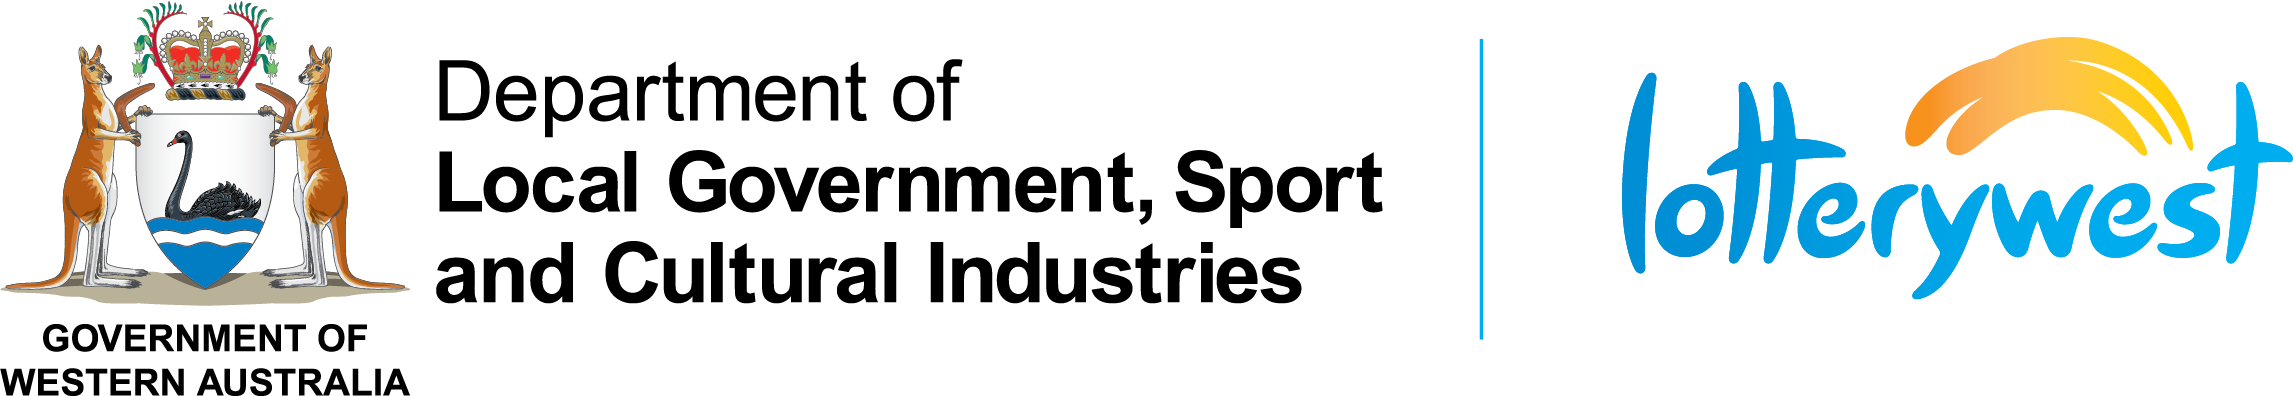 DLGSC and Lotterywest logo